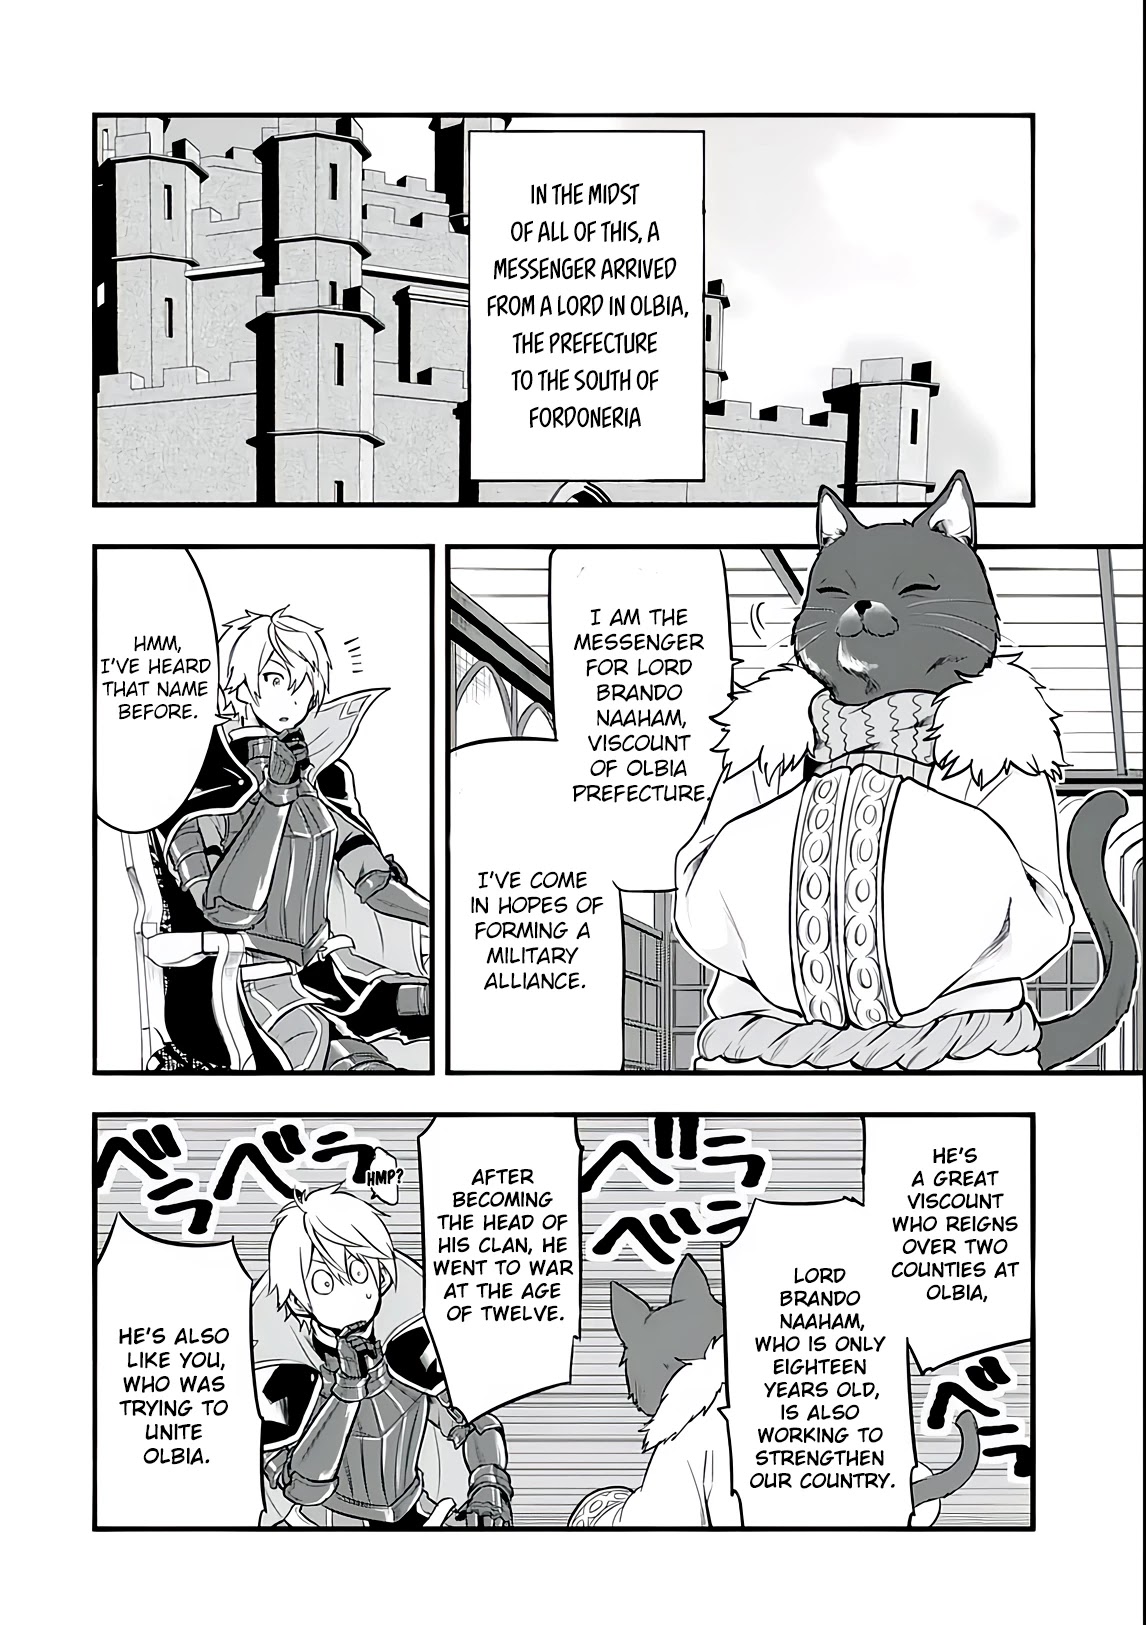 Mysterious Job Called Oda Nobunaga - Page 2